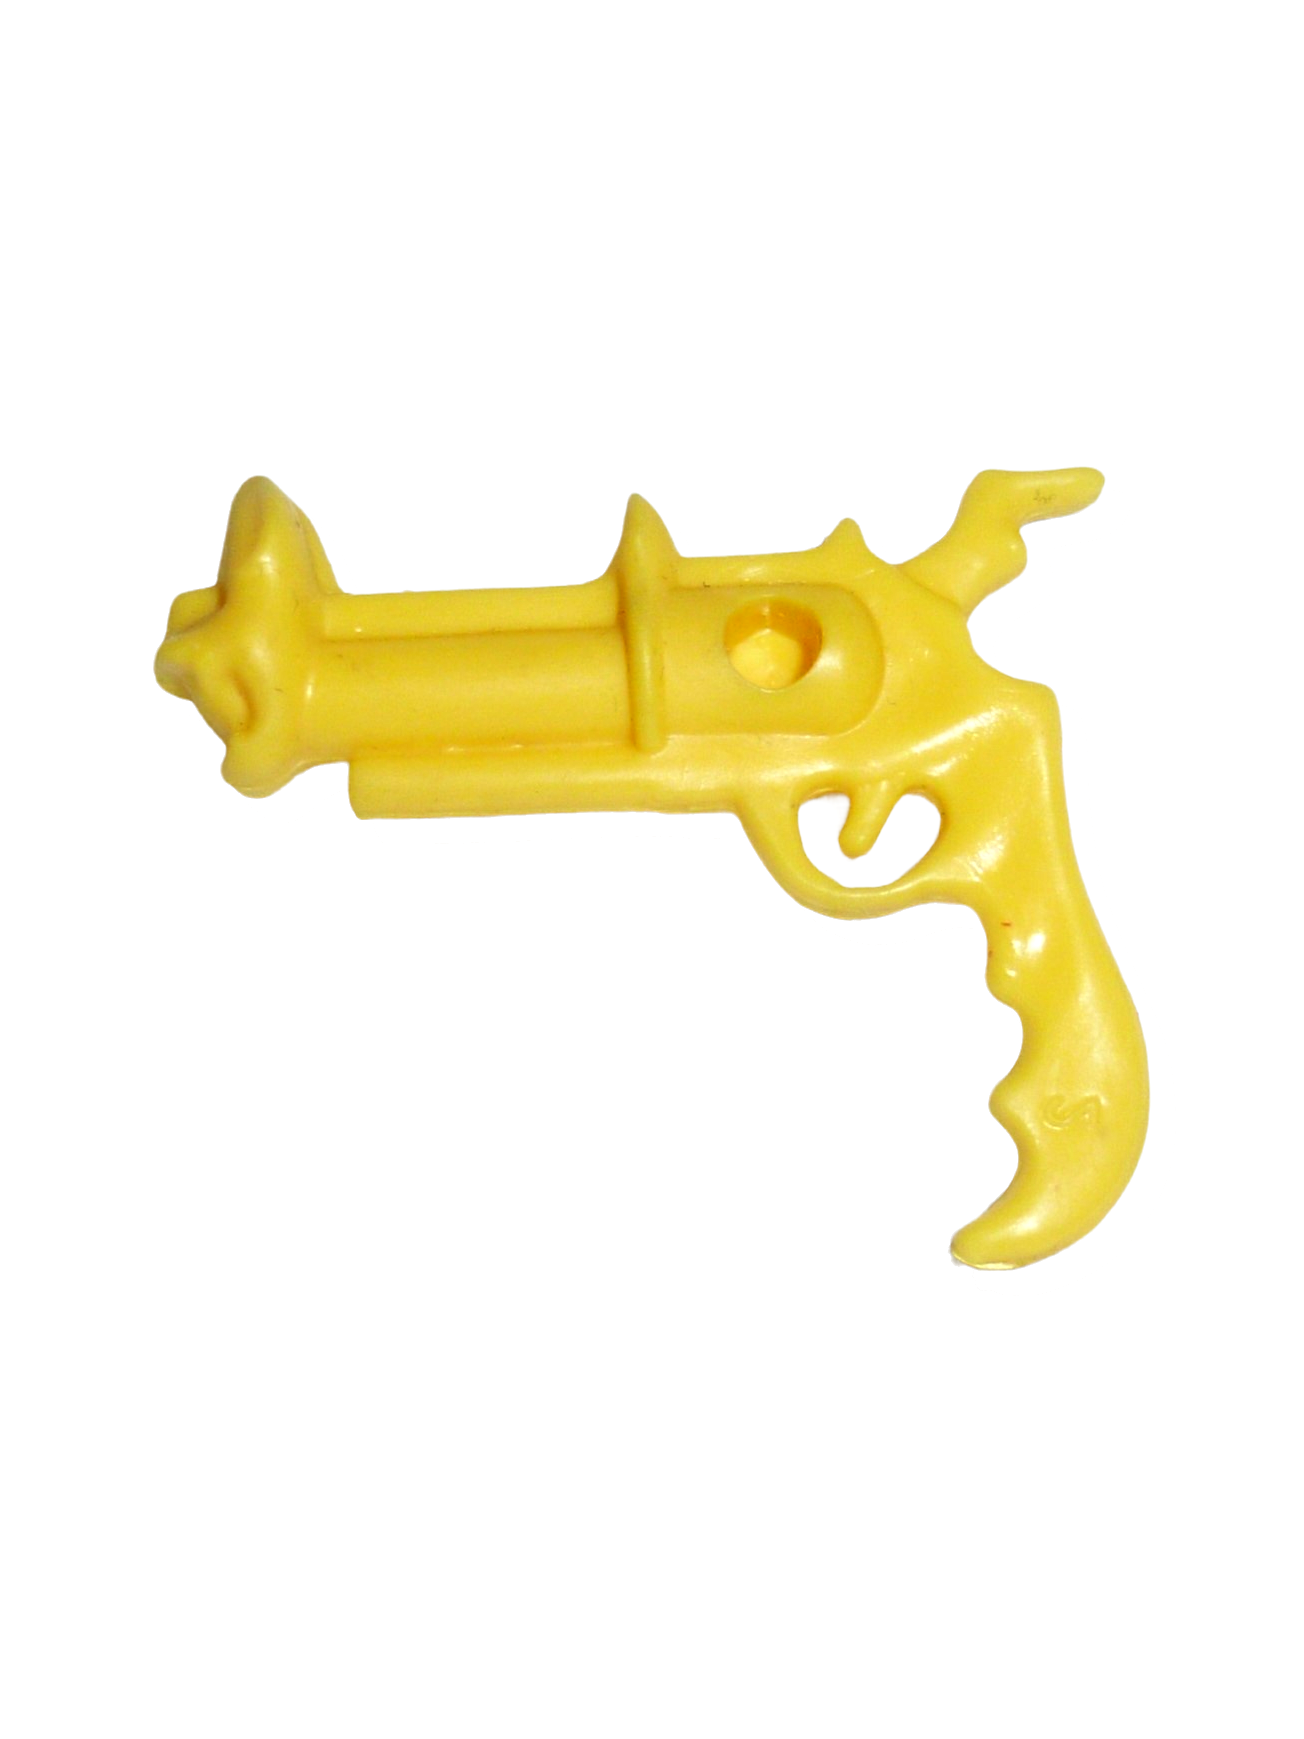 Wingnut pistol / gun 1990 Mirage Studios / Playmates Toys 2